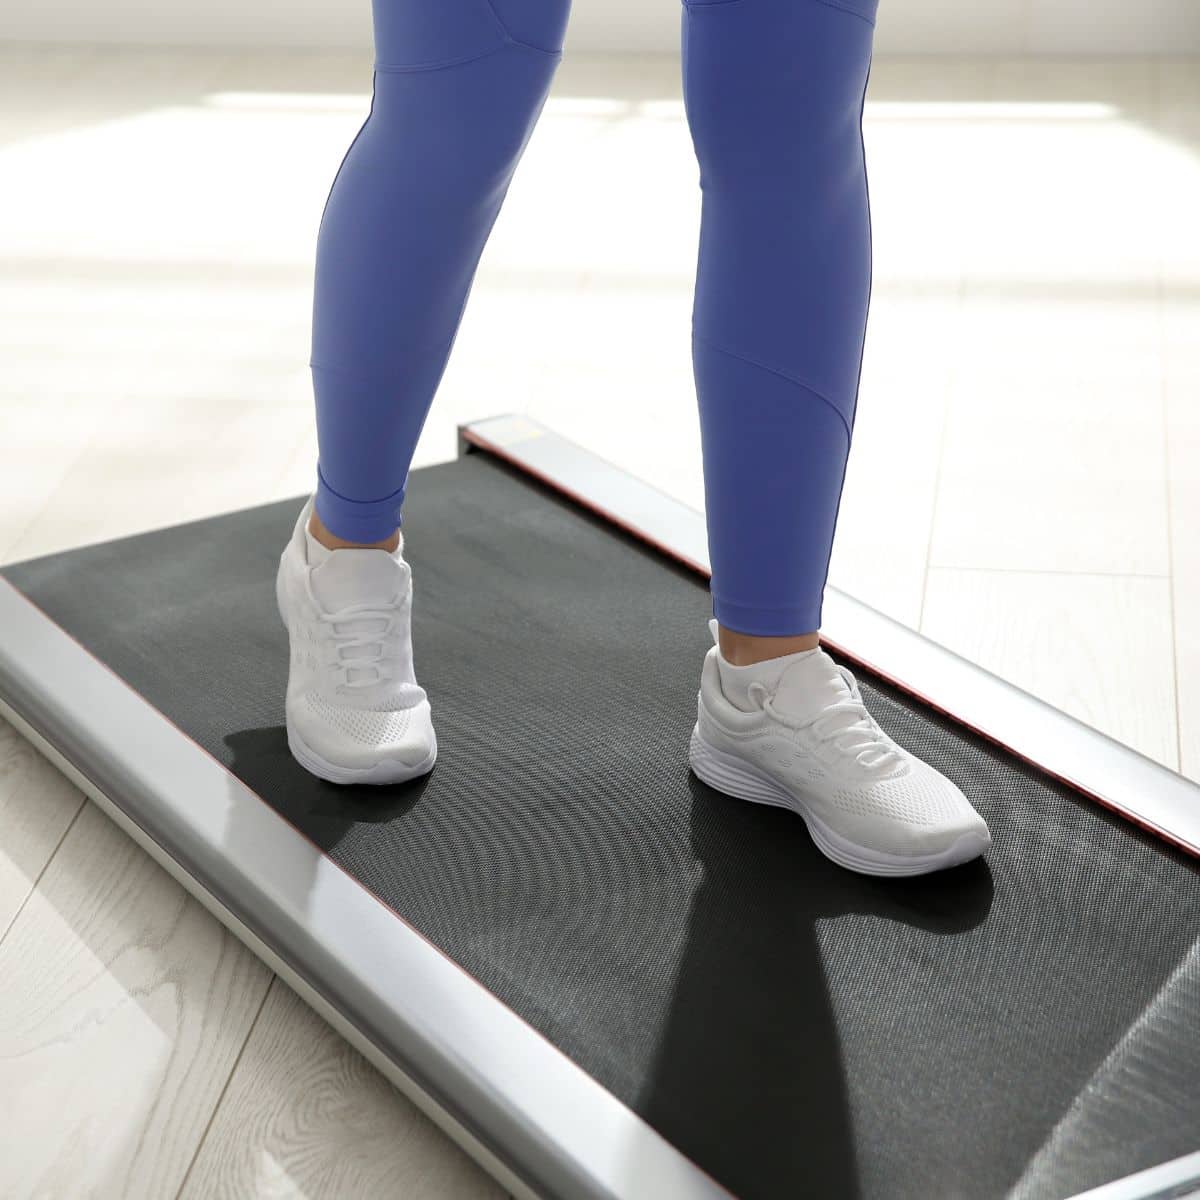 Walking Pad Review: Mini Treadmill Helped Me Hit My Step Goals